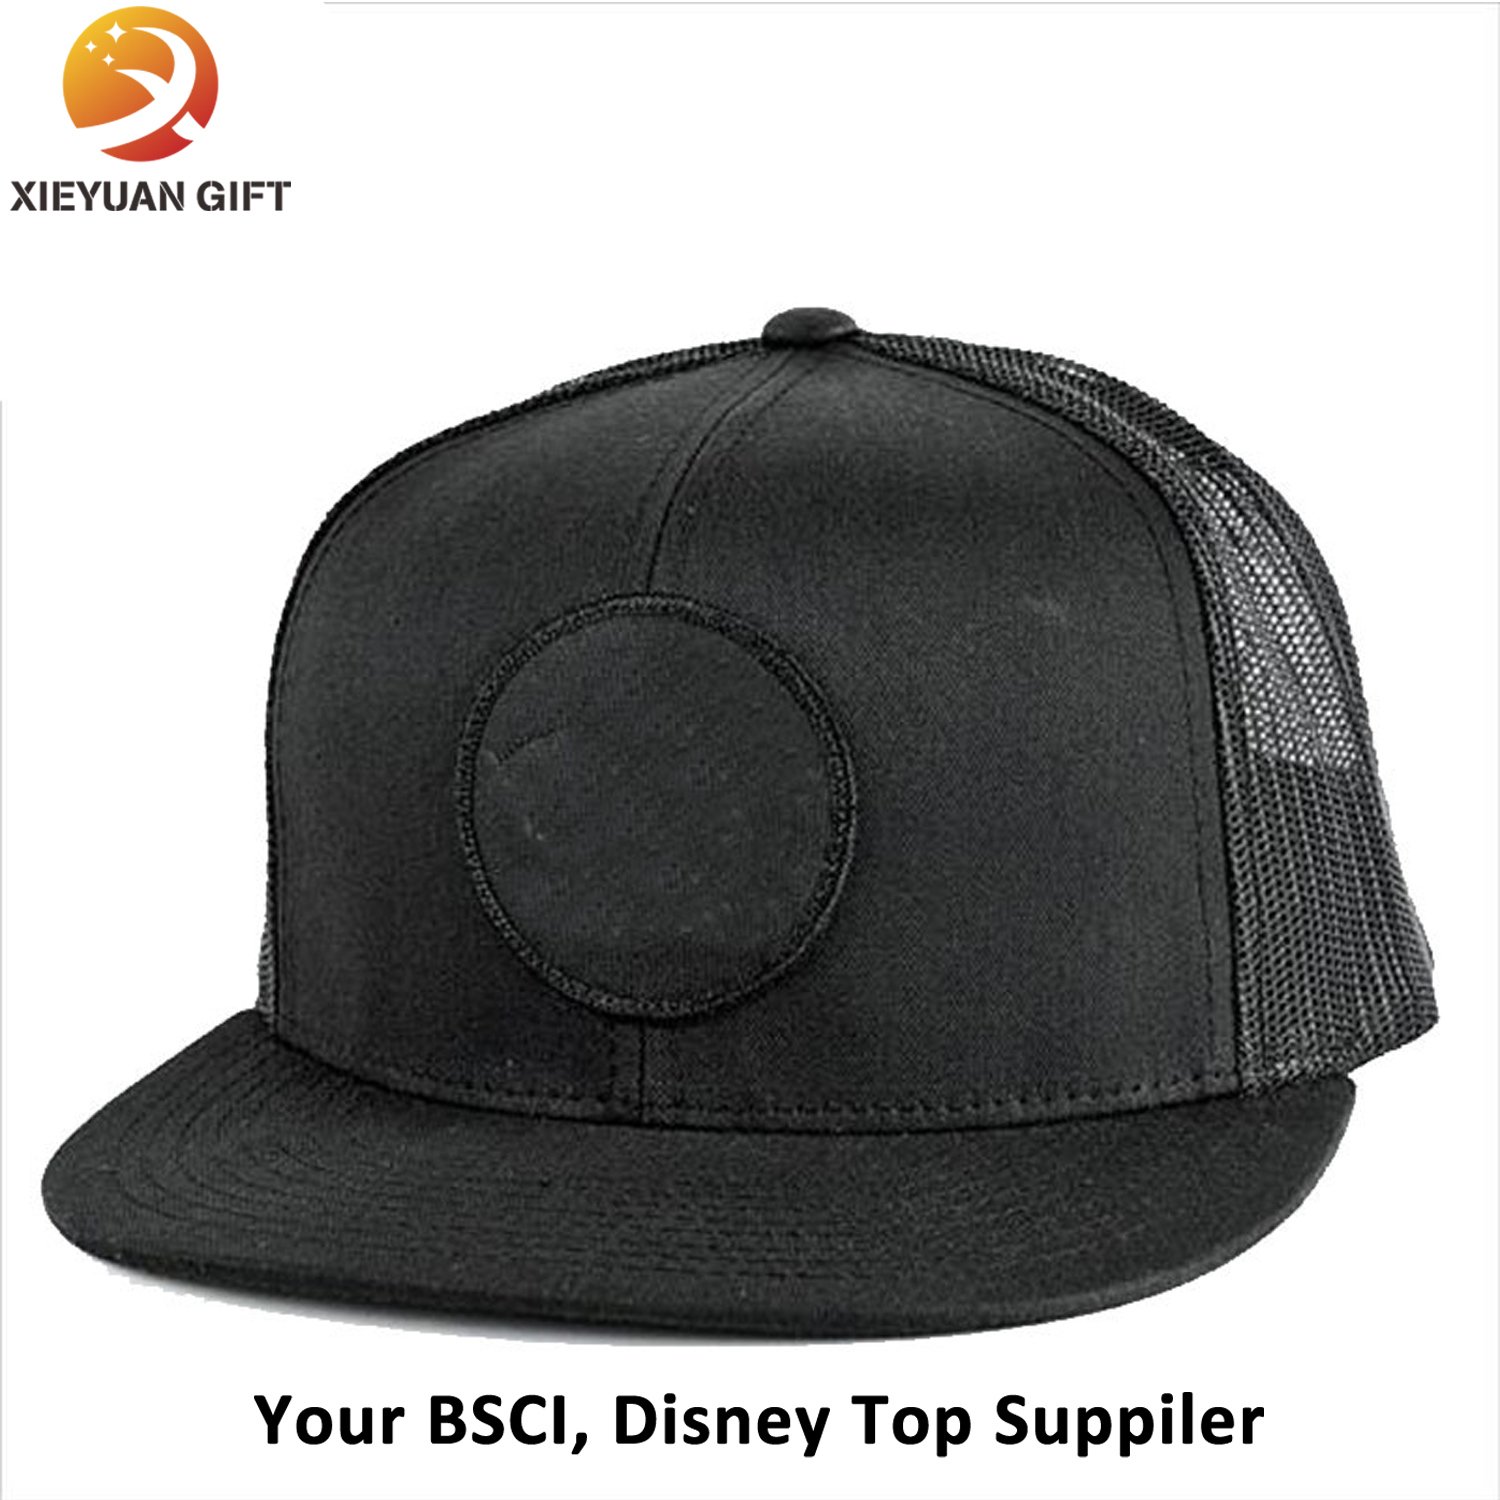 Design Ome Cheap Bump Cap/Hat Supplier